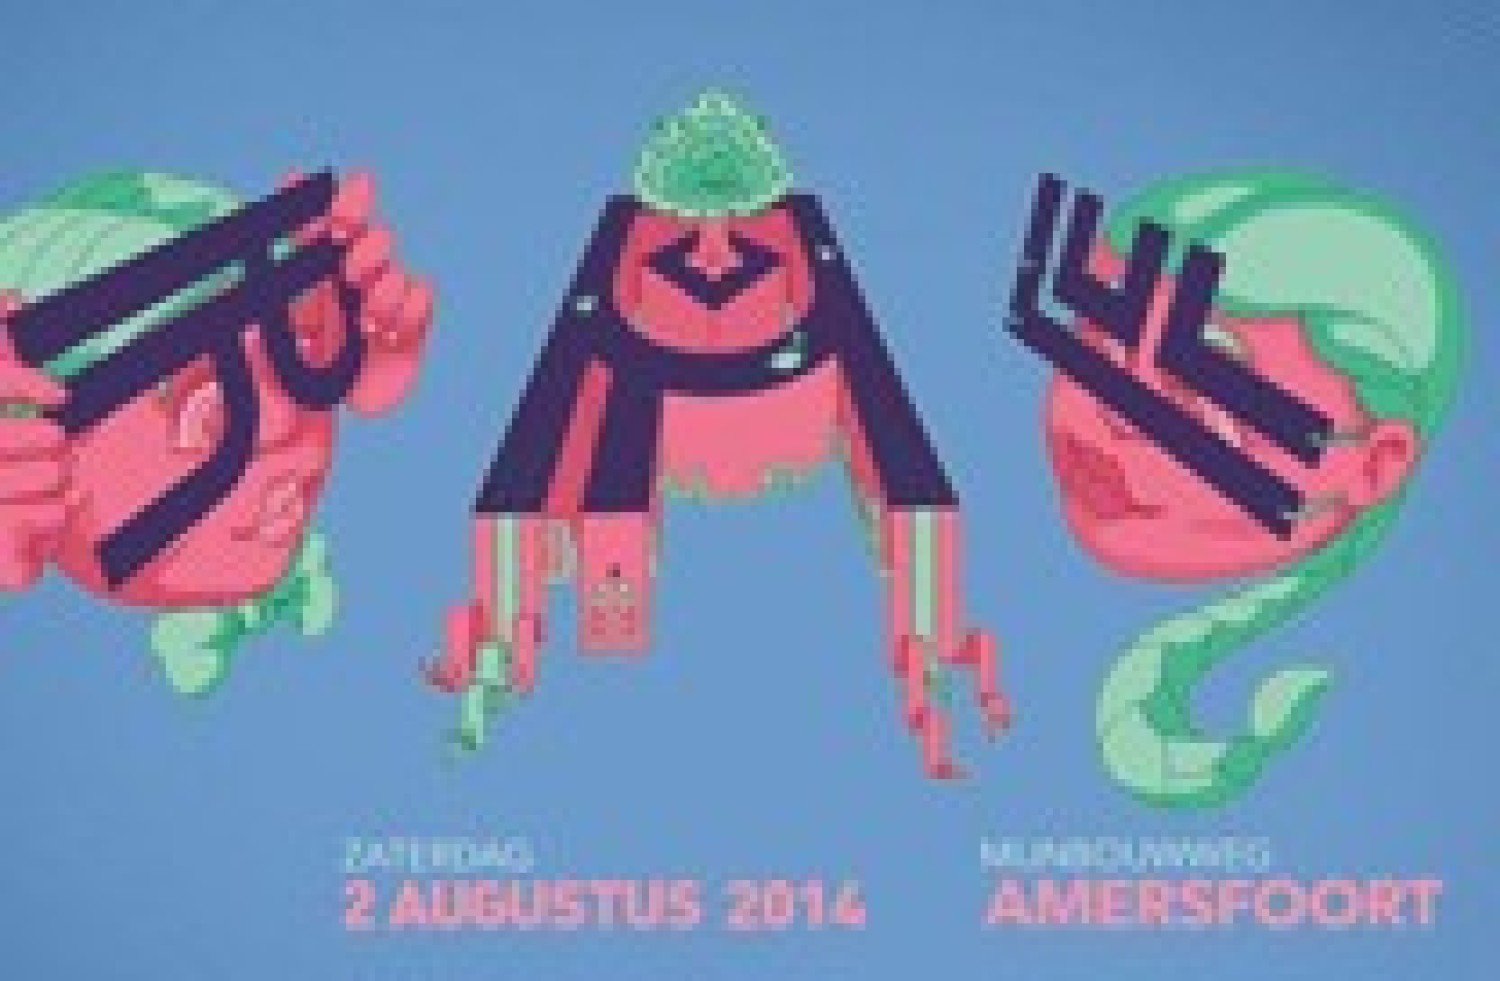 Party report: Kraft Festival, Amersfoort (02-08-2014)